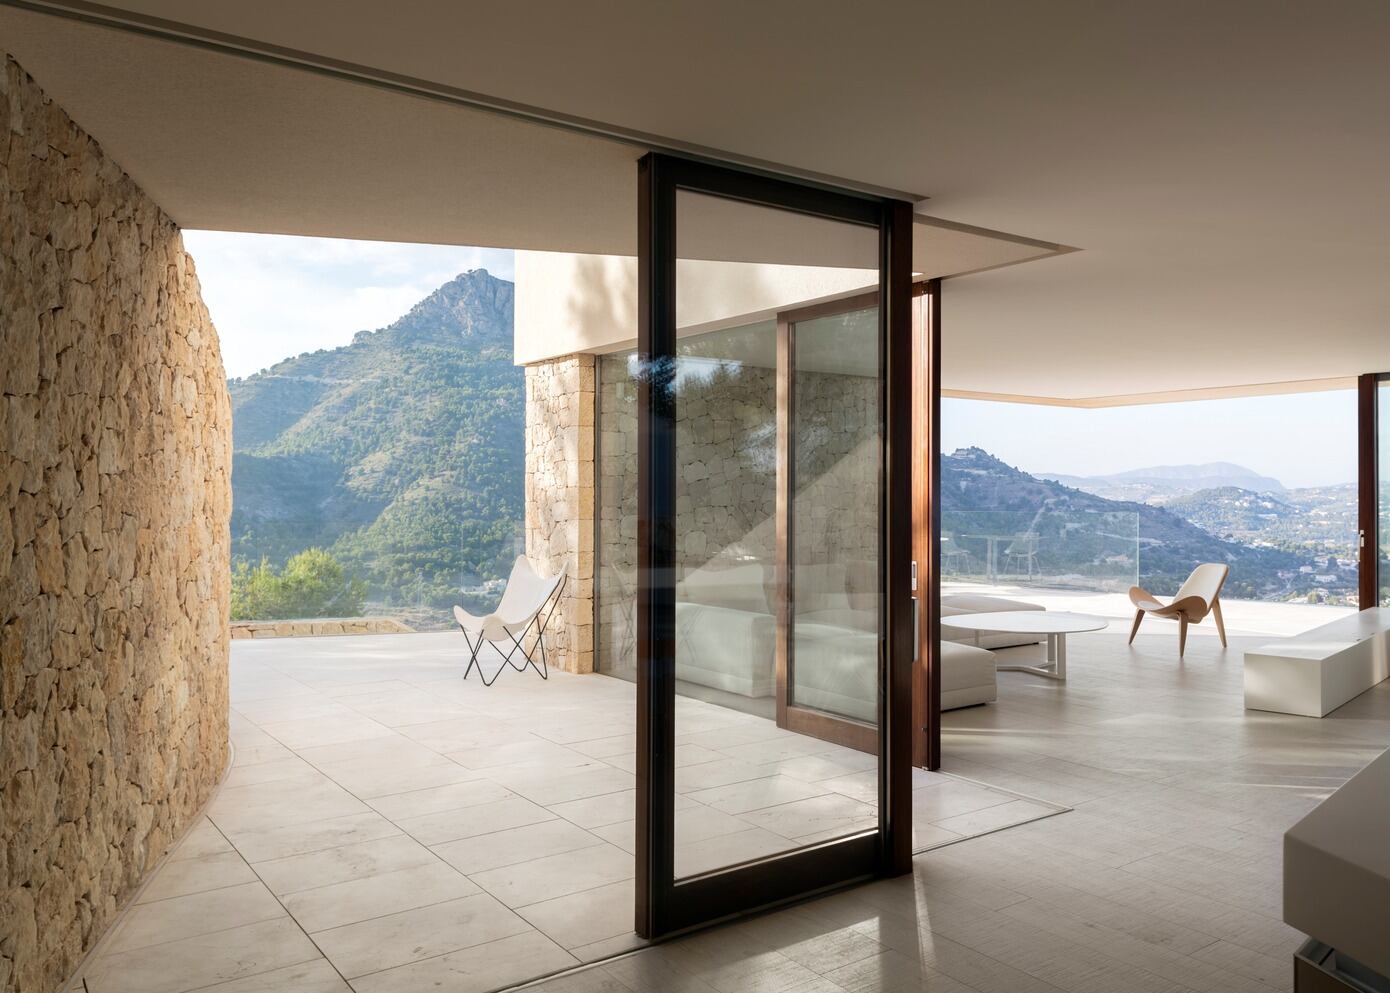 Casa Maryvilla: A Panoramic Costa Blanca Home with an Eco-Friendly Design